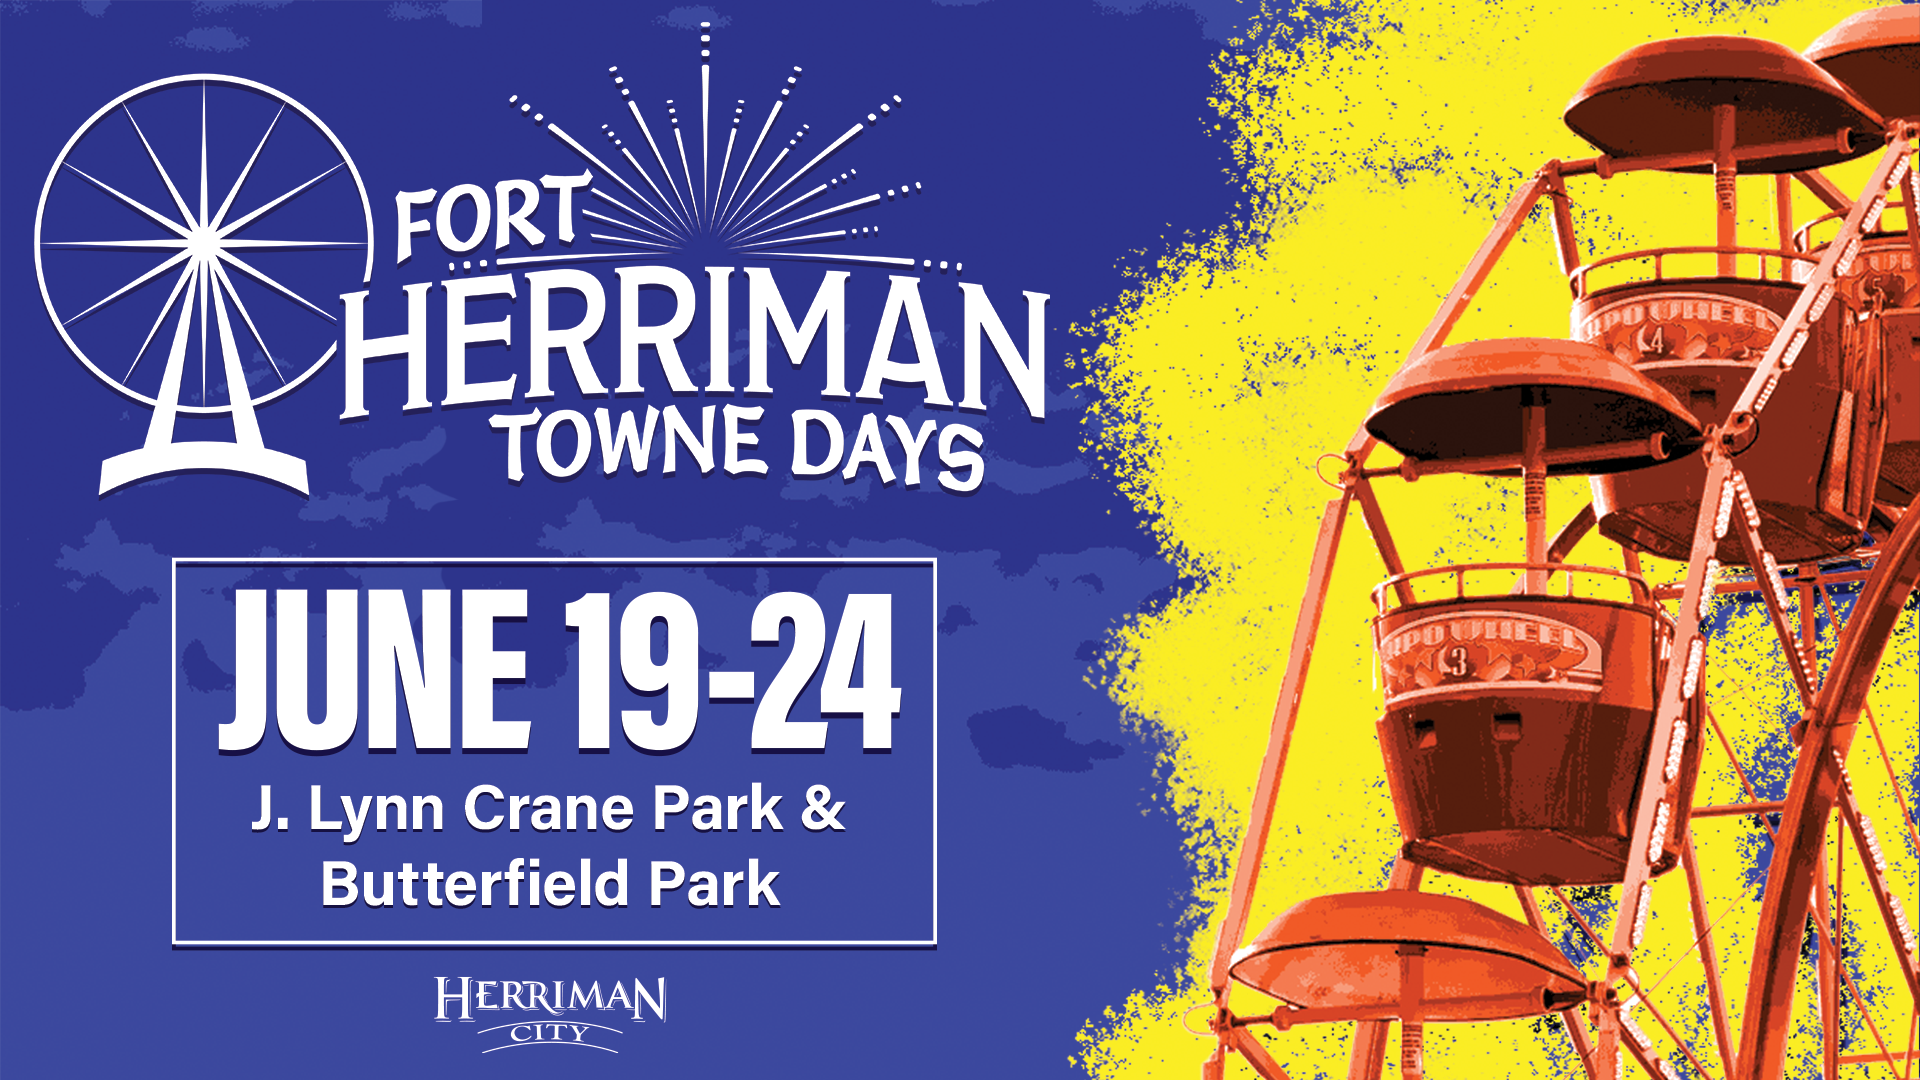 Fort Herriman Towne Days